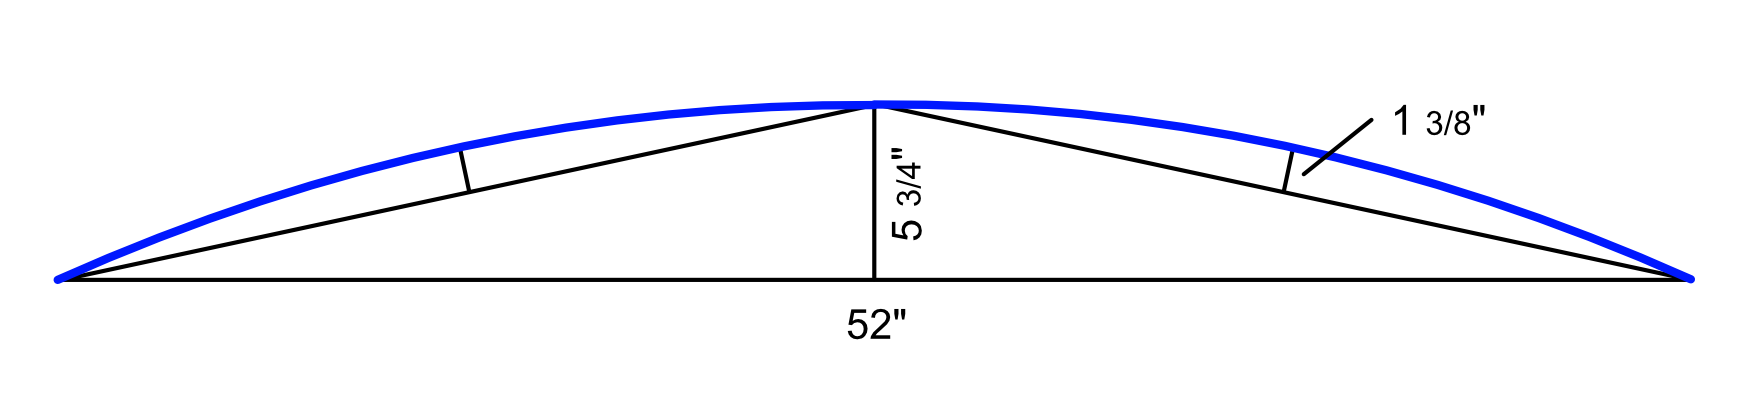 taffrail template v3 measurements